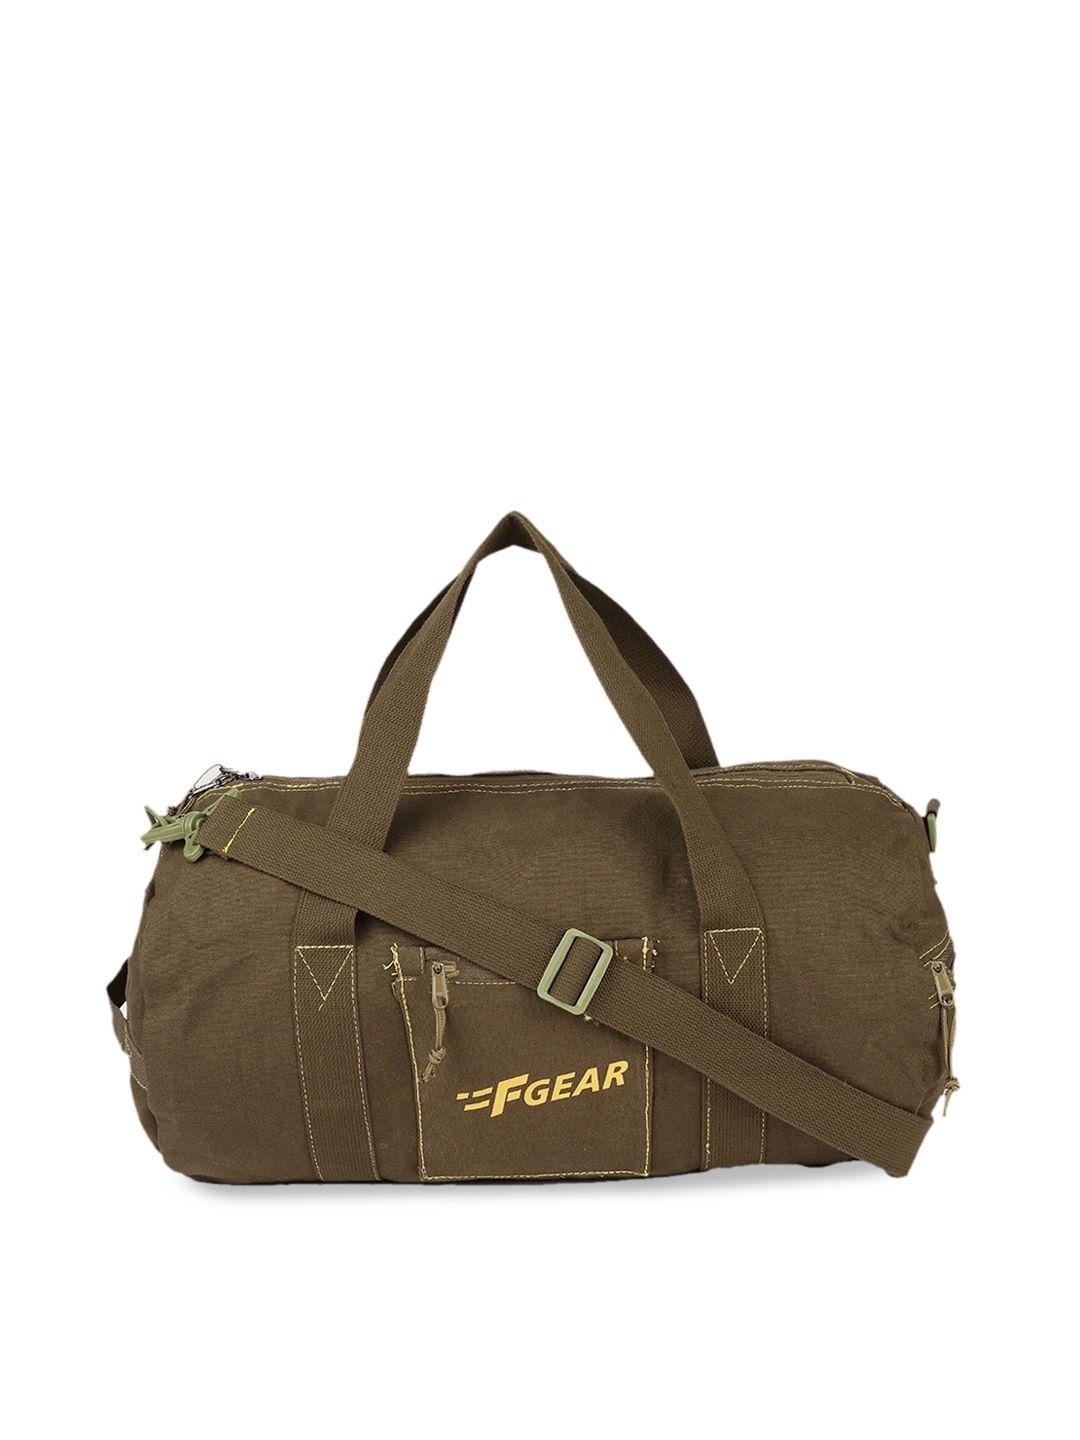 f gear unisex olive green duffel bag